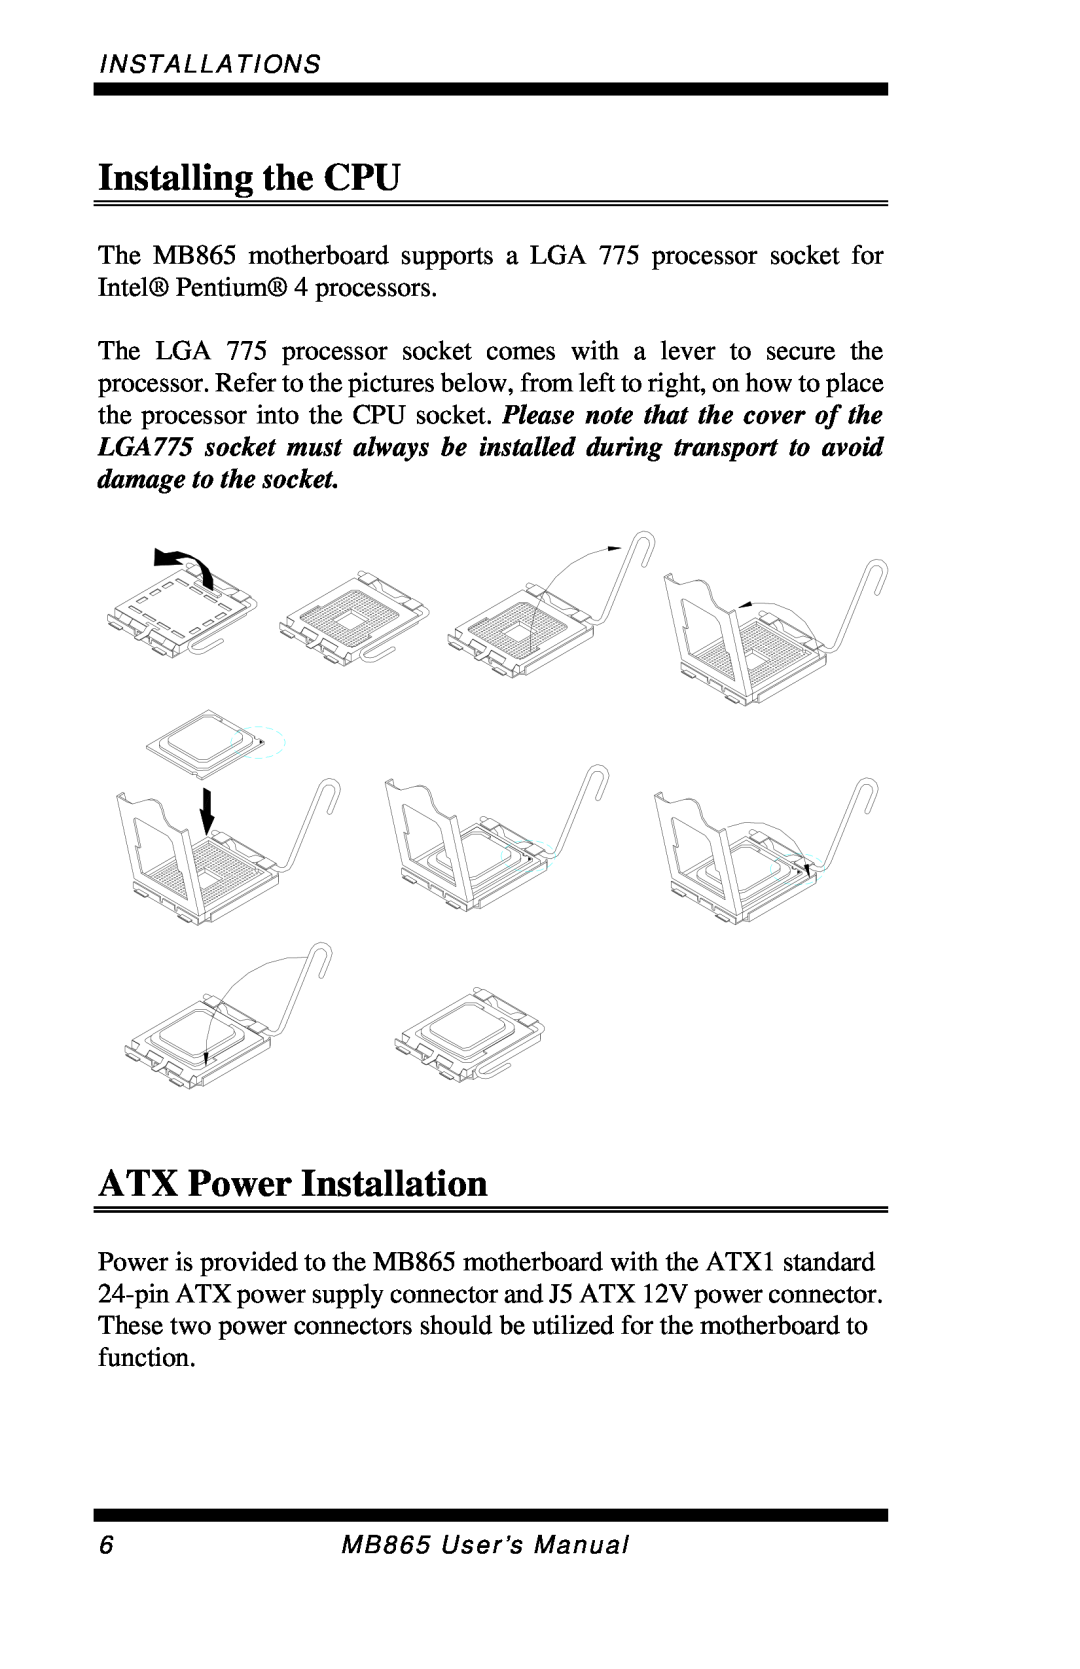 Intel MB865 user manual Installing the CPU, ATX Power Installation, Installations 